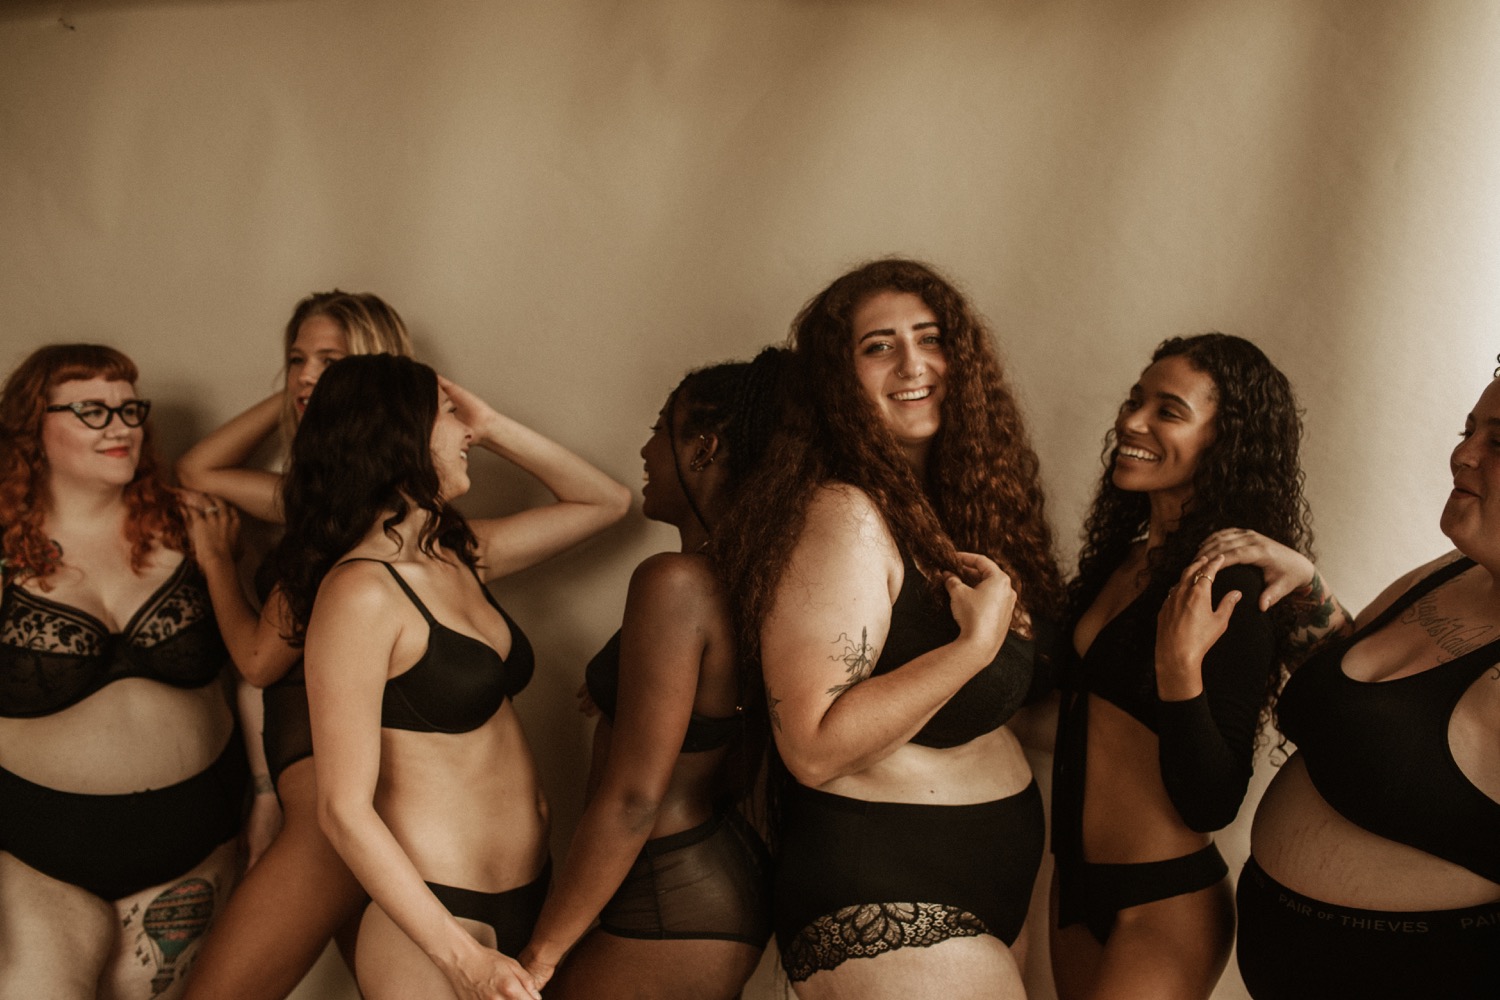 Joyful Women In Their Underwear by Stocksy Contributor Ohlamour Studio -  Stocksy